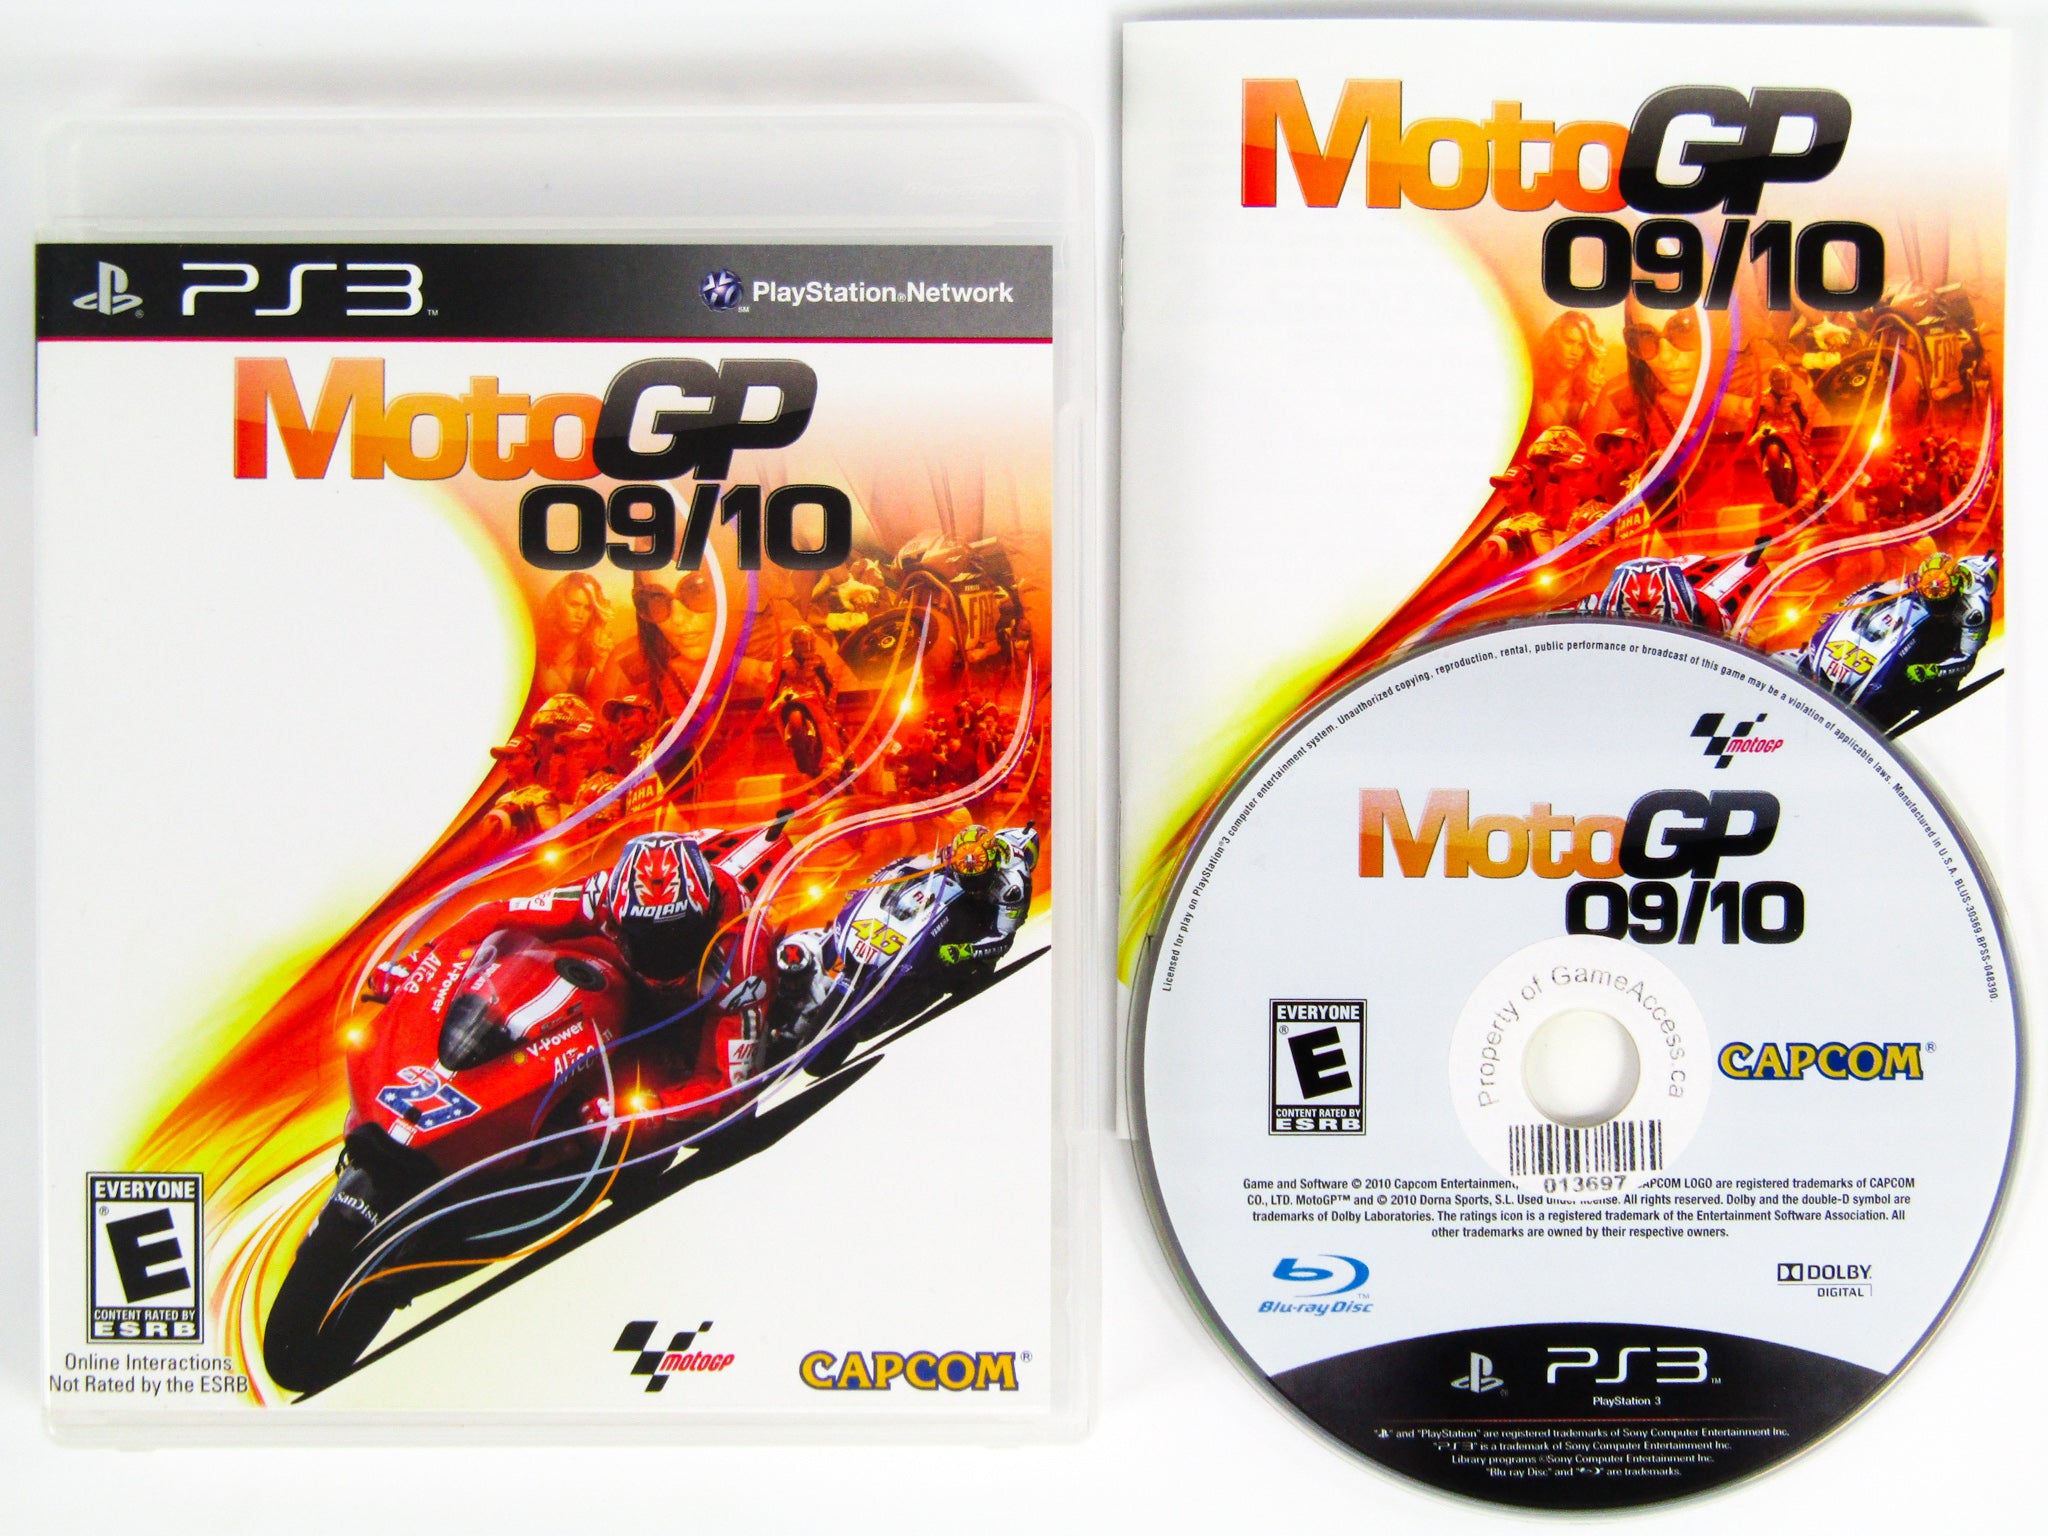 MotoGP 09/10 - Game Overview